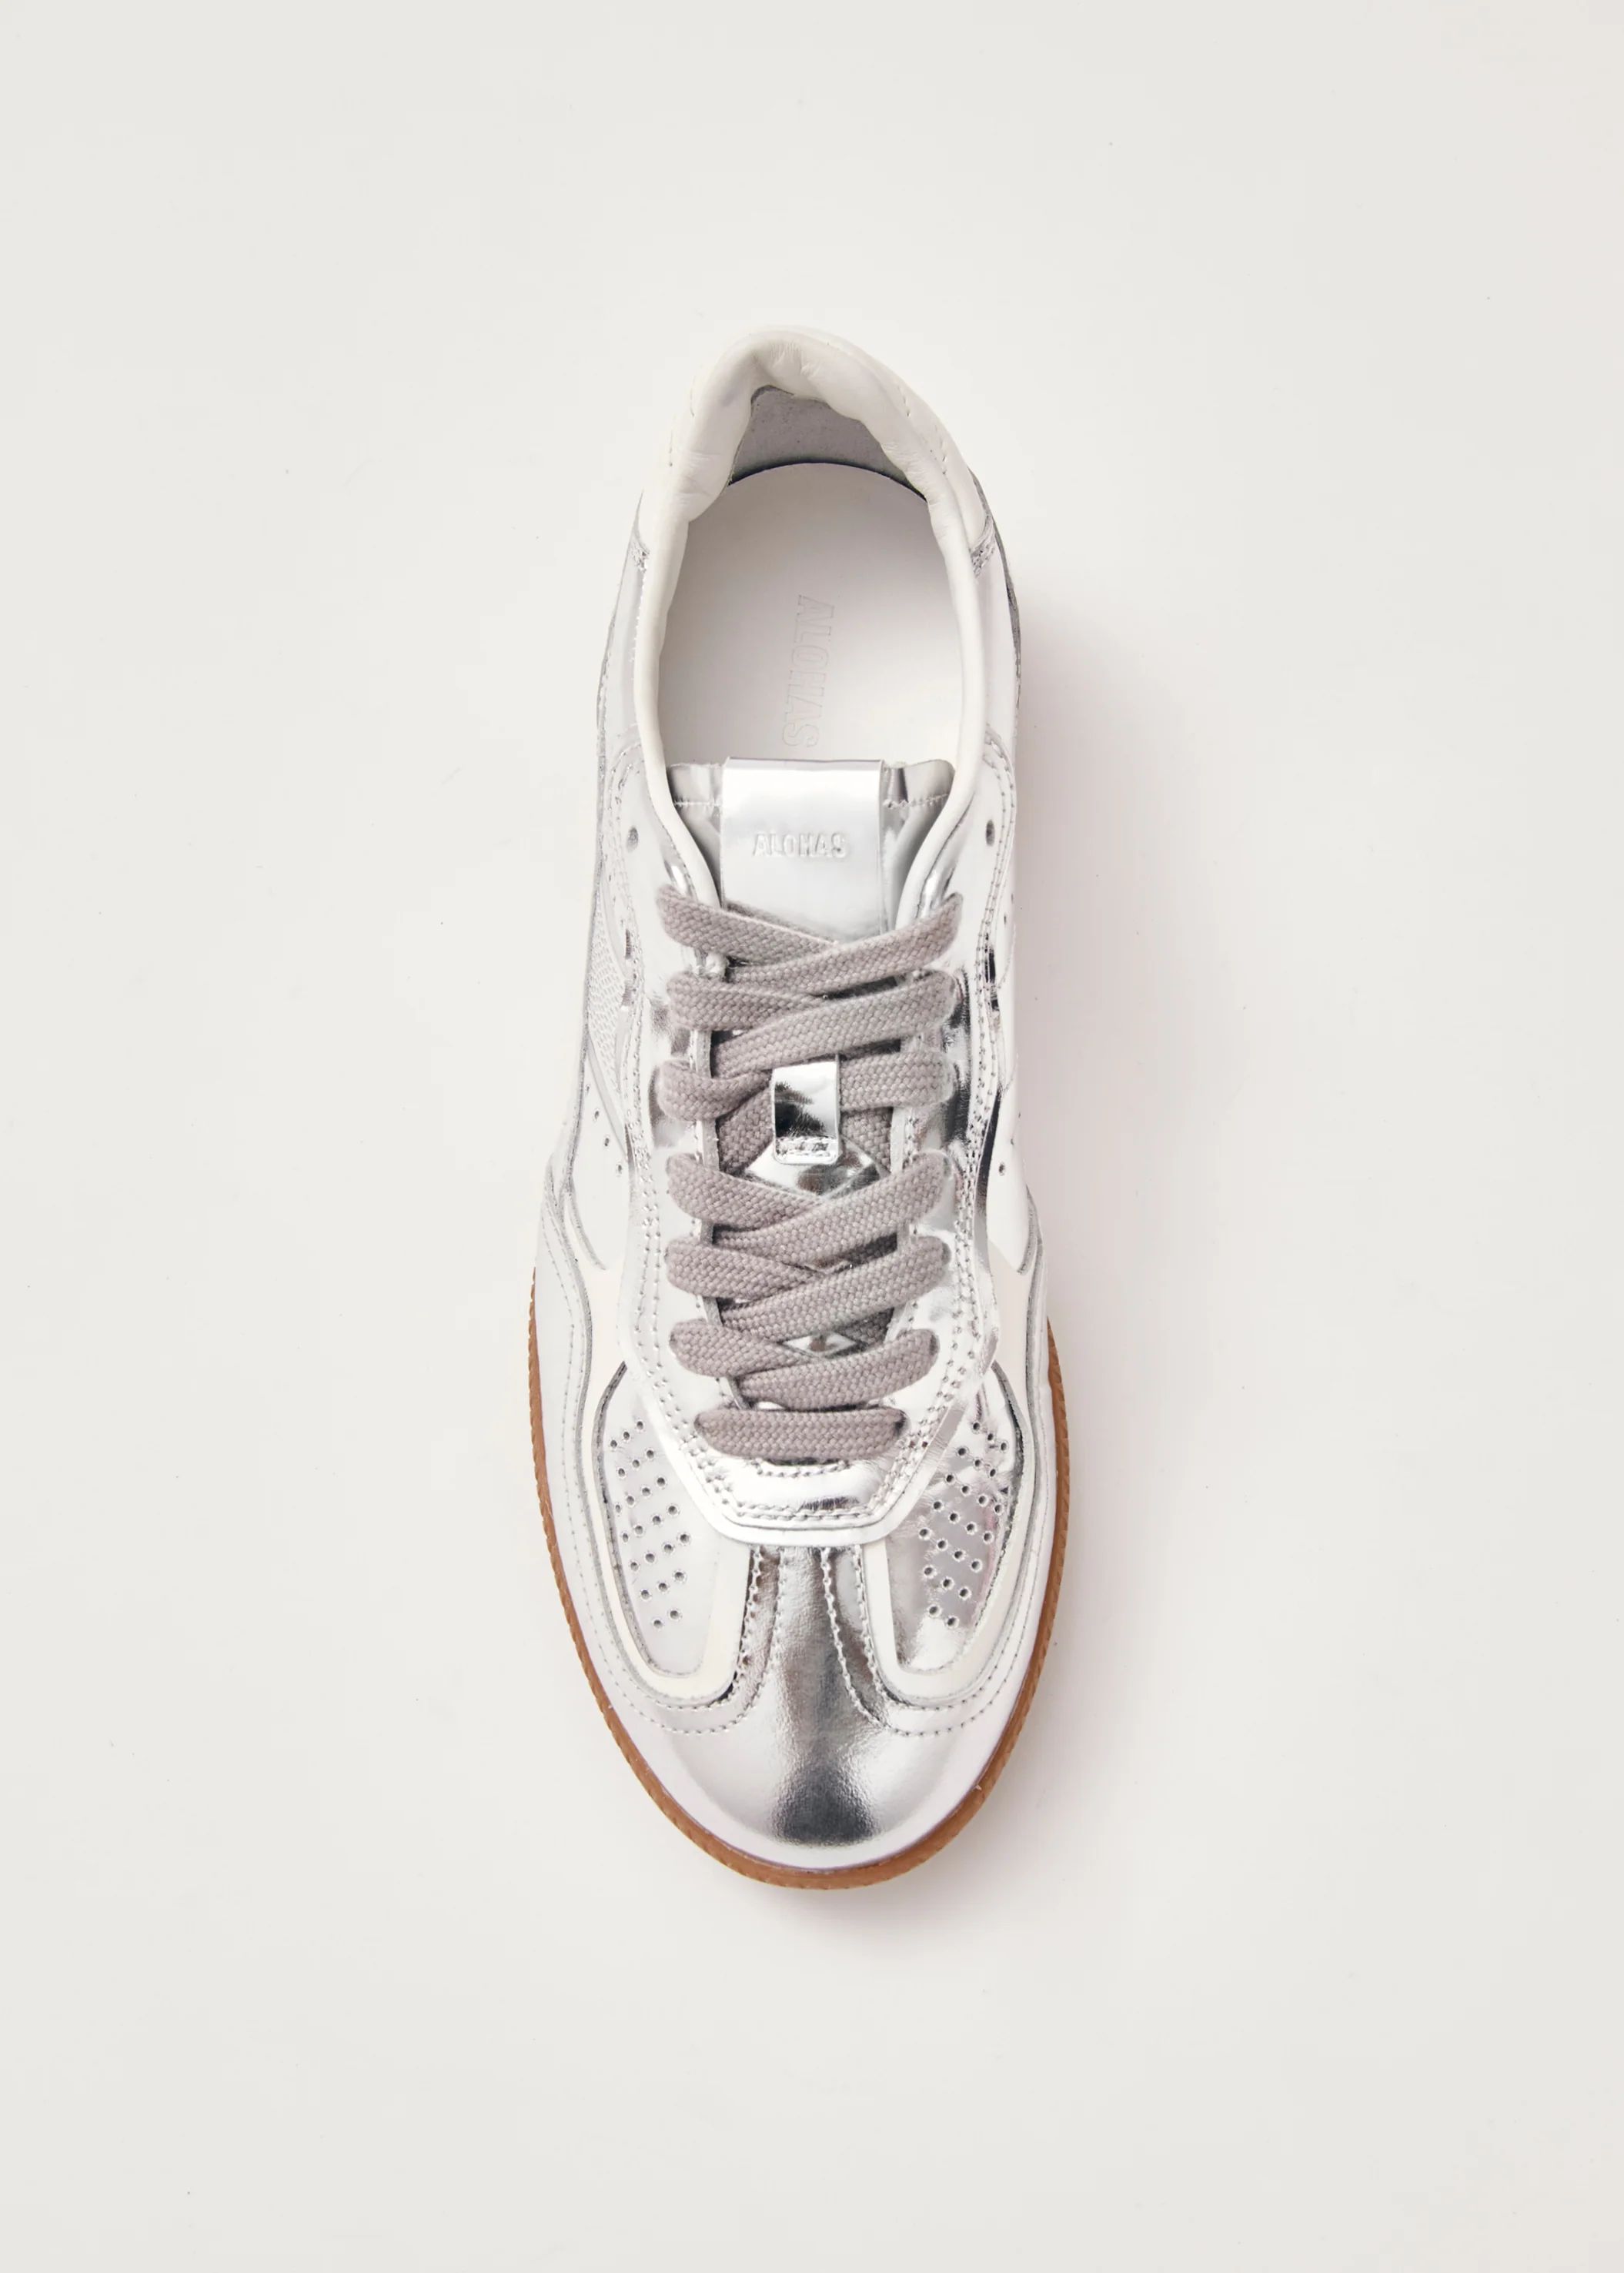 Tb.490 Rife Shimmer Silver Cream Leather Sneakers | ALOHAS | Alohas US